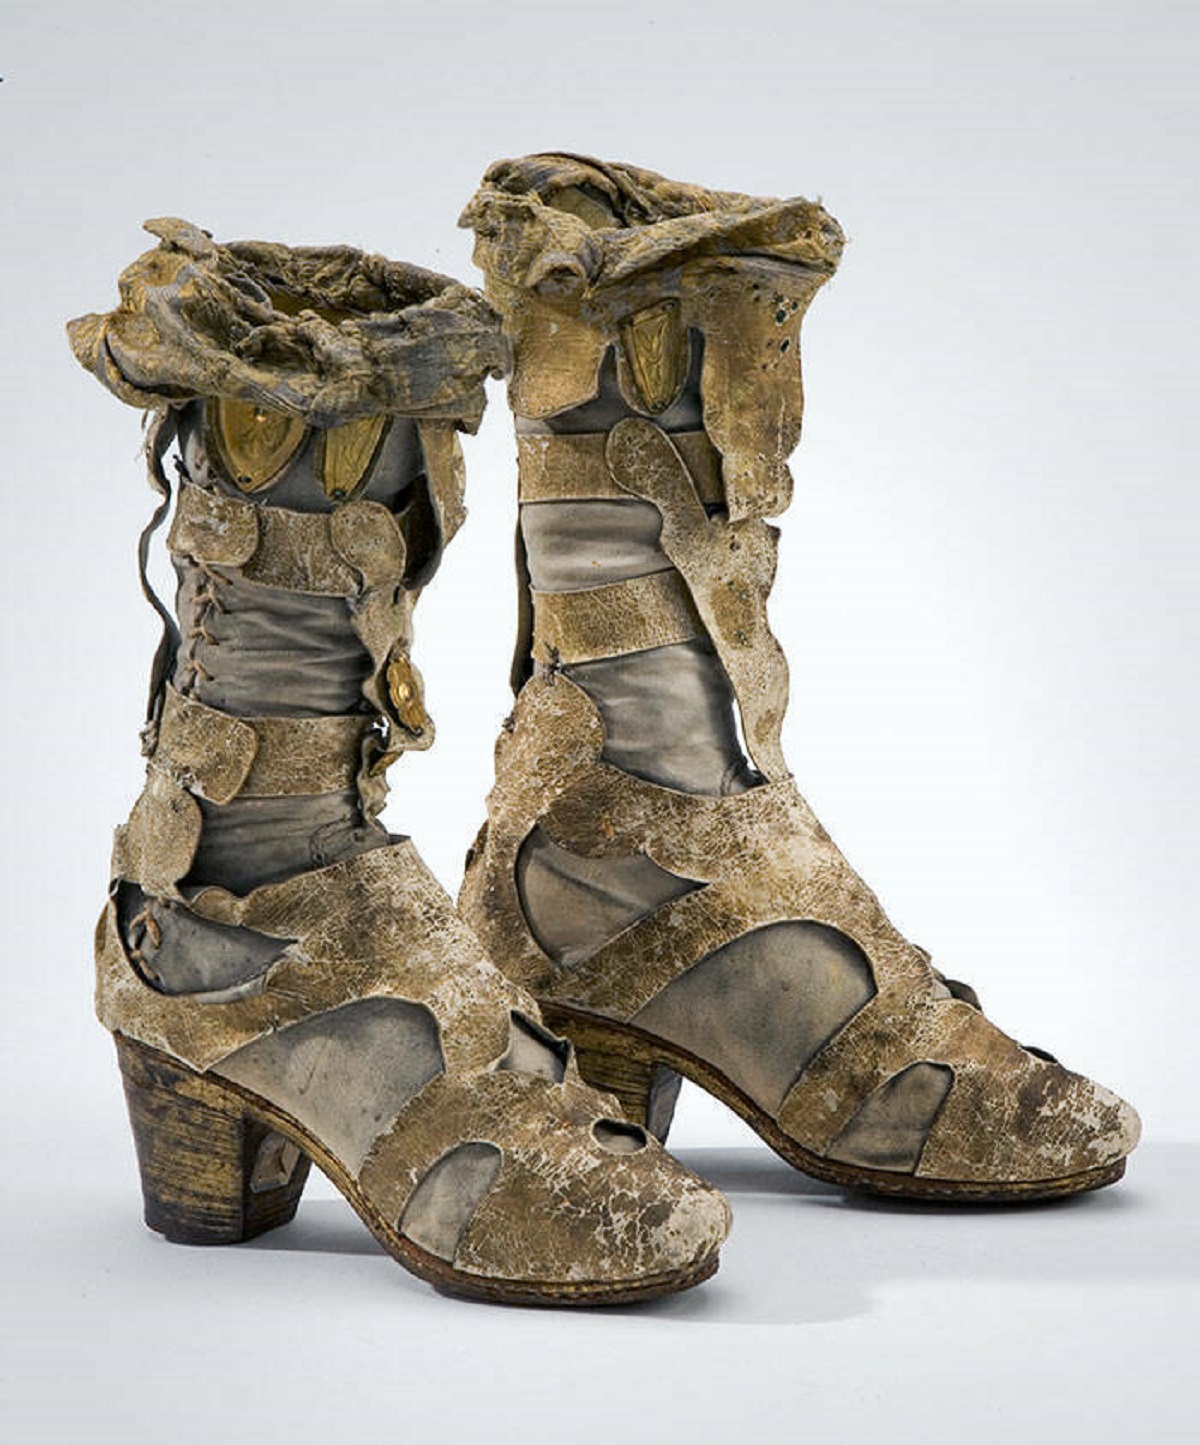 "17th Century Boots, Certamen Equestre"